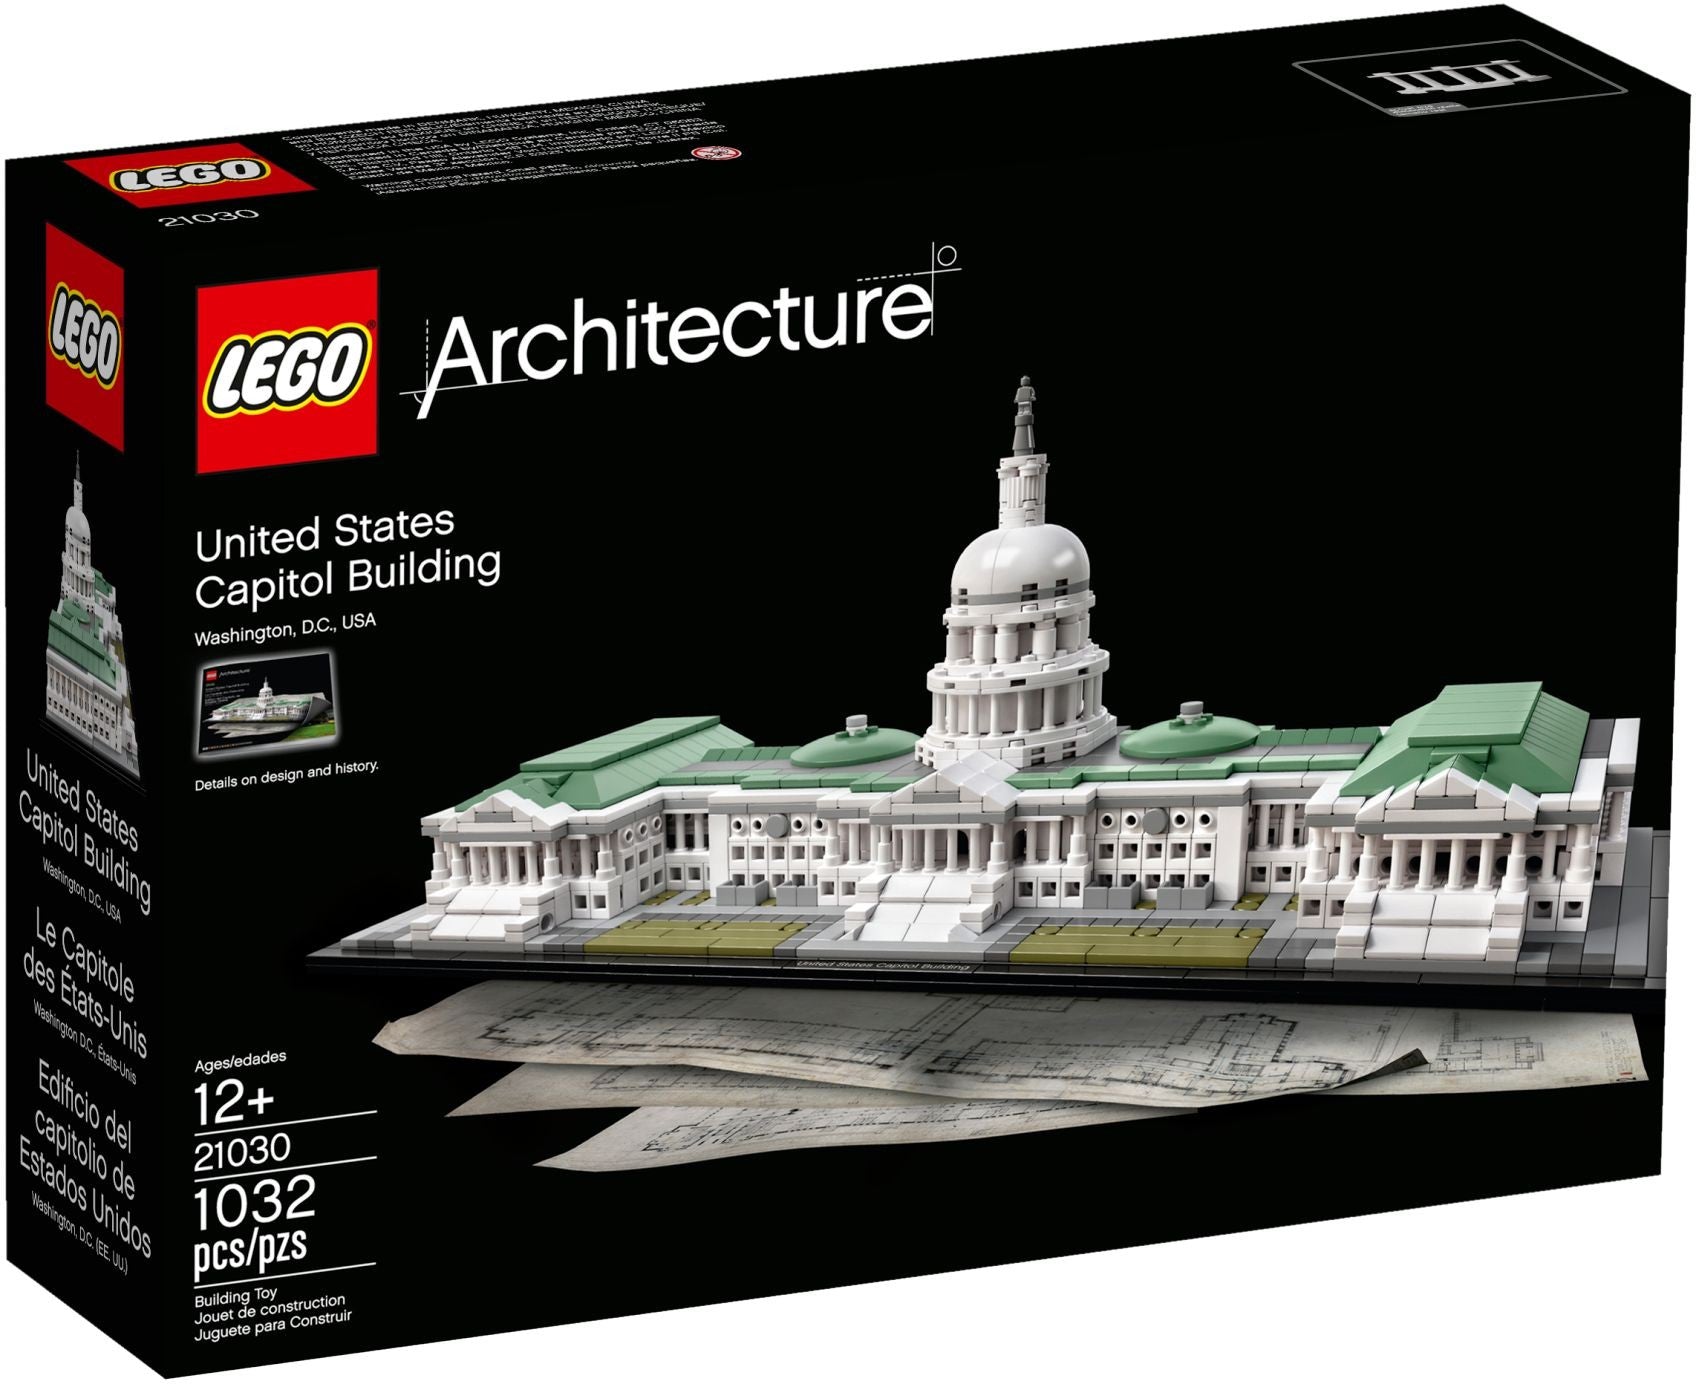 Lego Architecture 21030 - United States Capitol Building